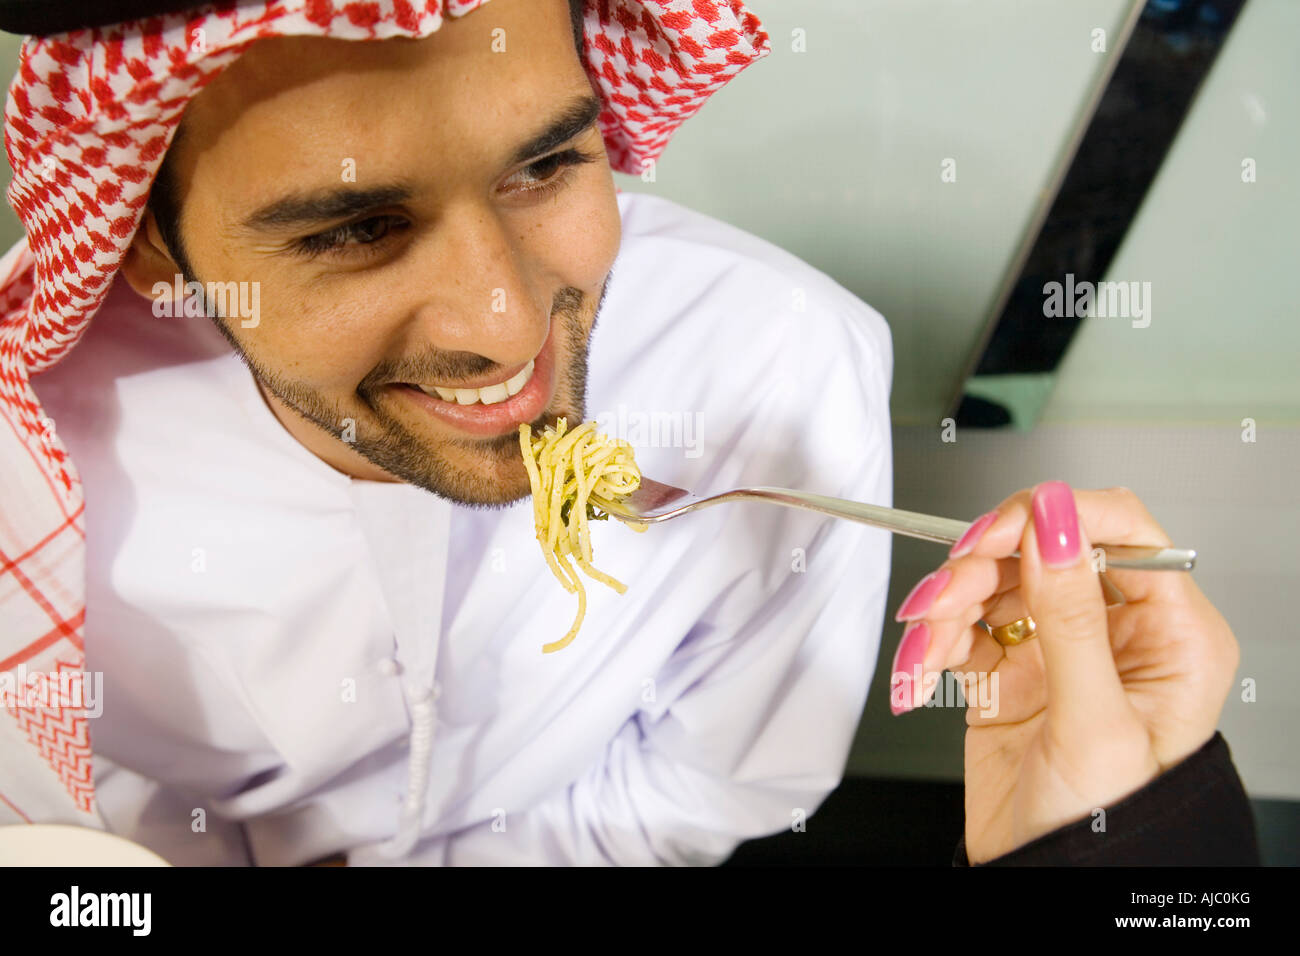 Arabische Frau füttert lächelnden Mann Spaghetti, High Angle View Stockfoto